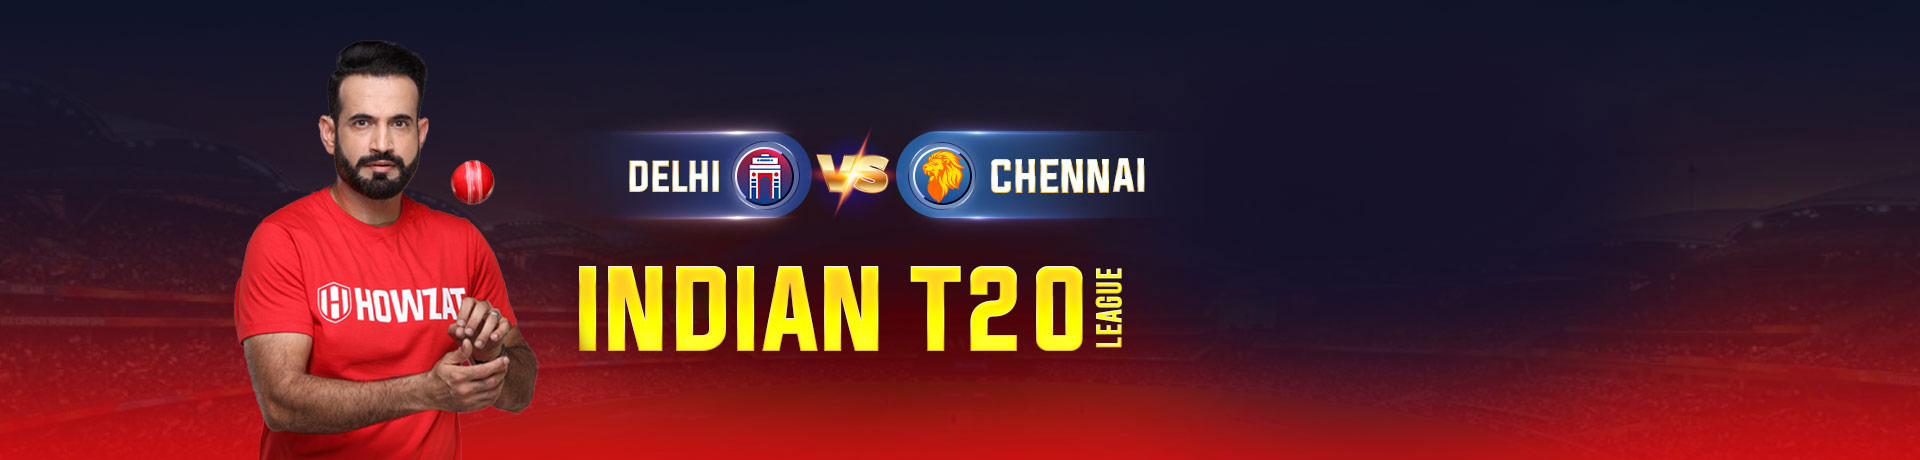 Delhi vs Chennai Indian T20 League